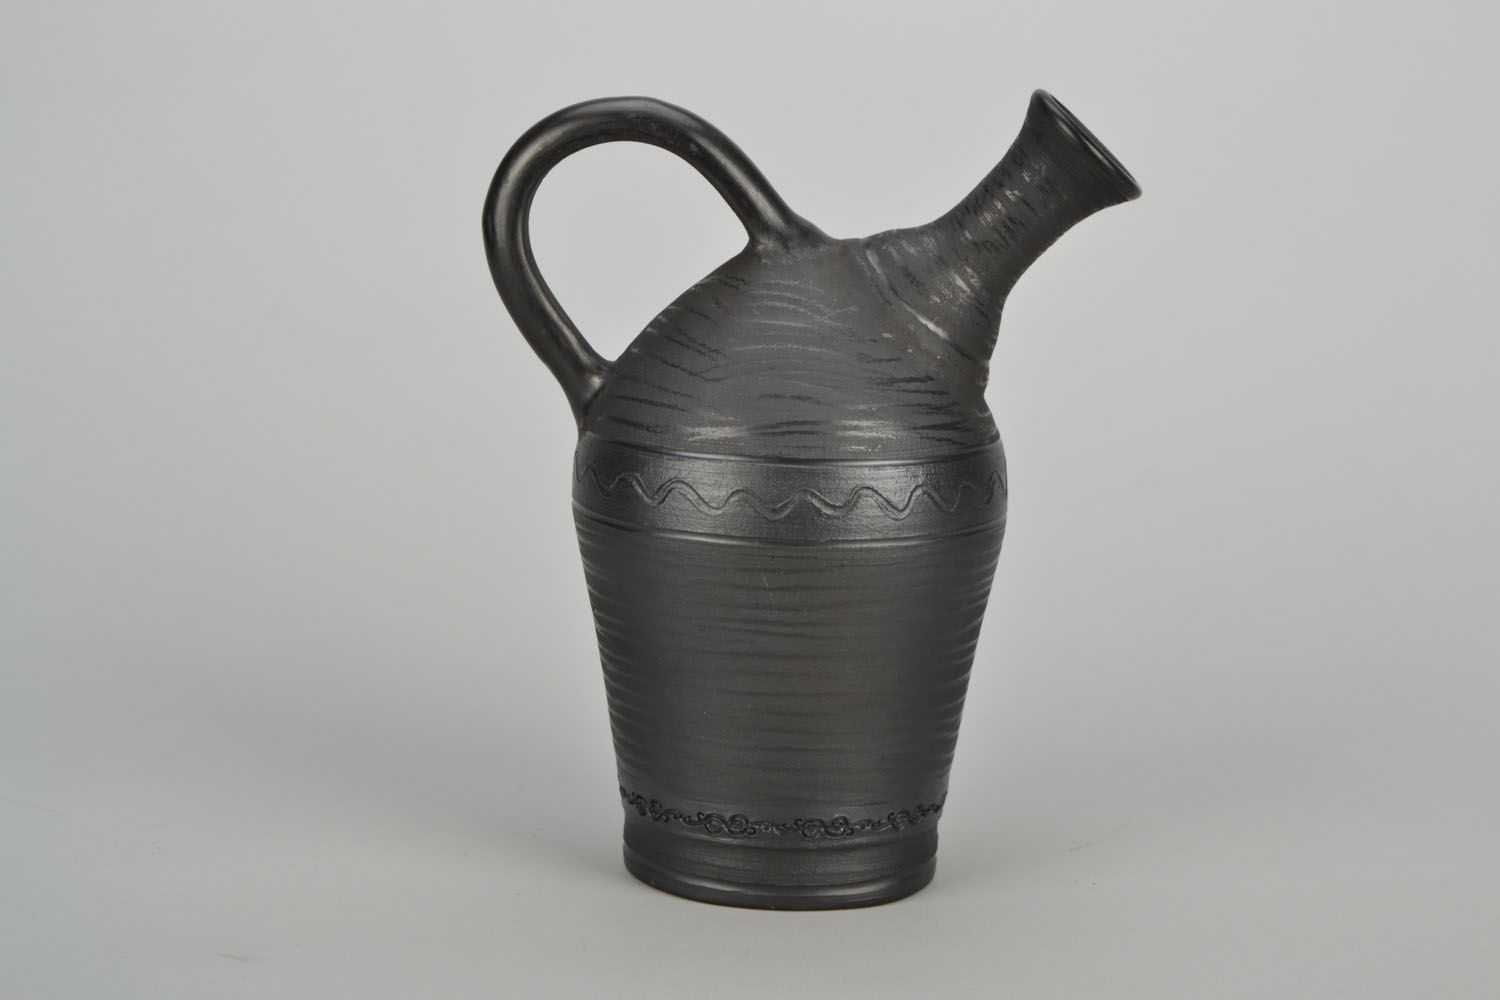 60 oz ceramic handmade wine jug made of black clay with handle in Greek amphora shape 1,7 lb photo 3